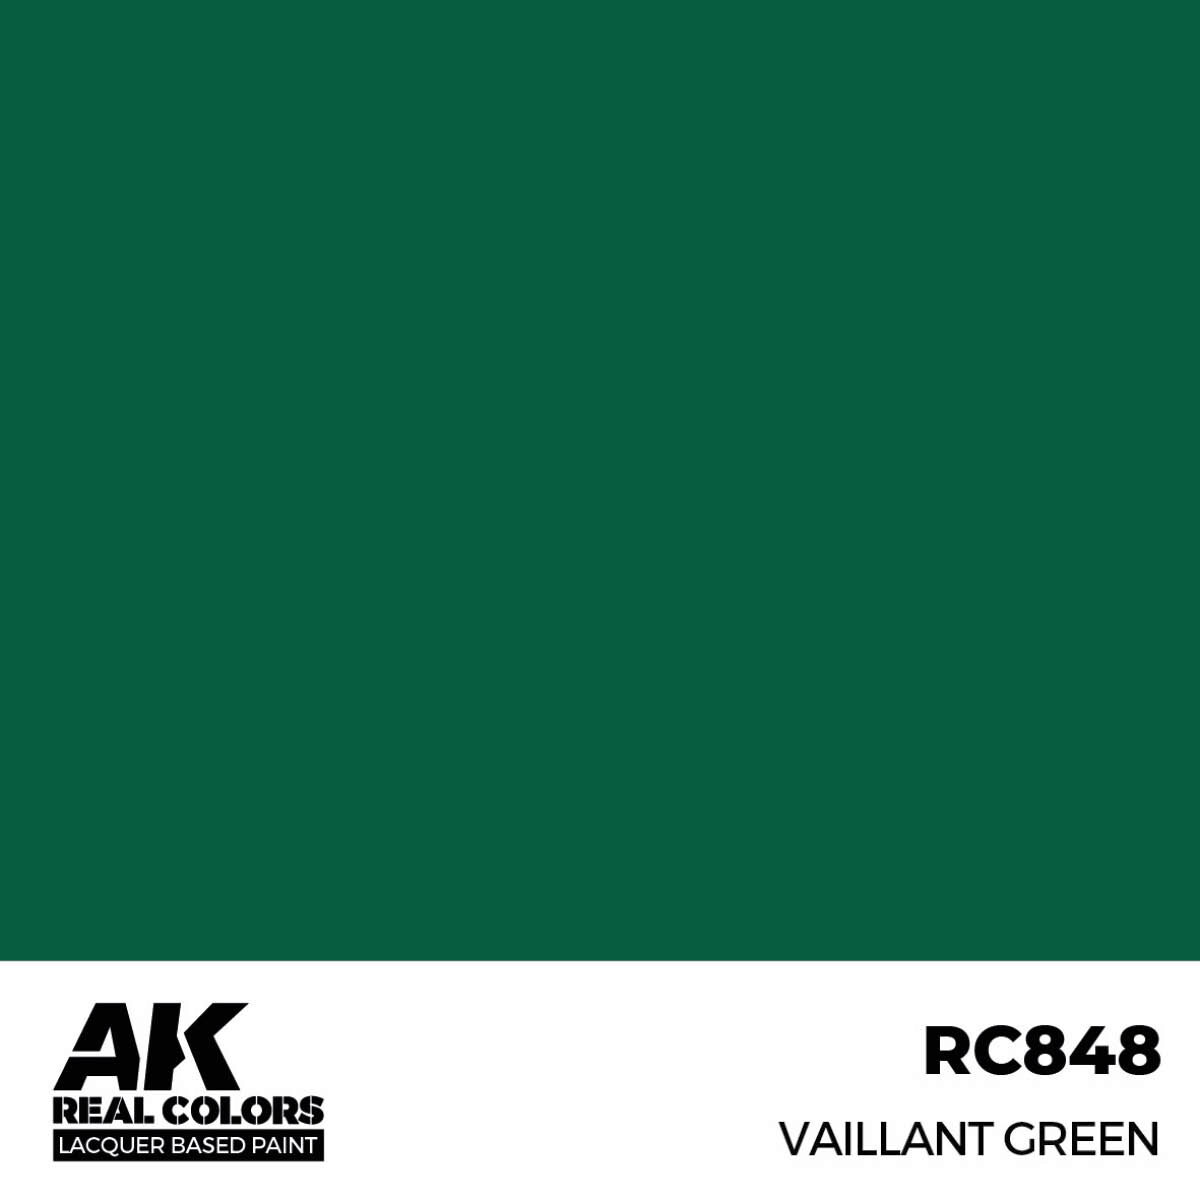 AK RC848 Real Colors Vaillant Green 17 ml.